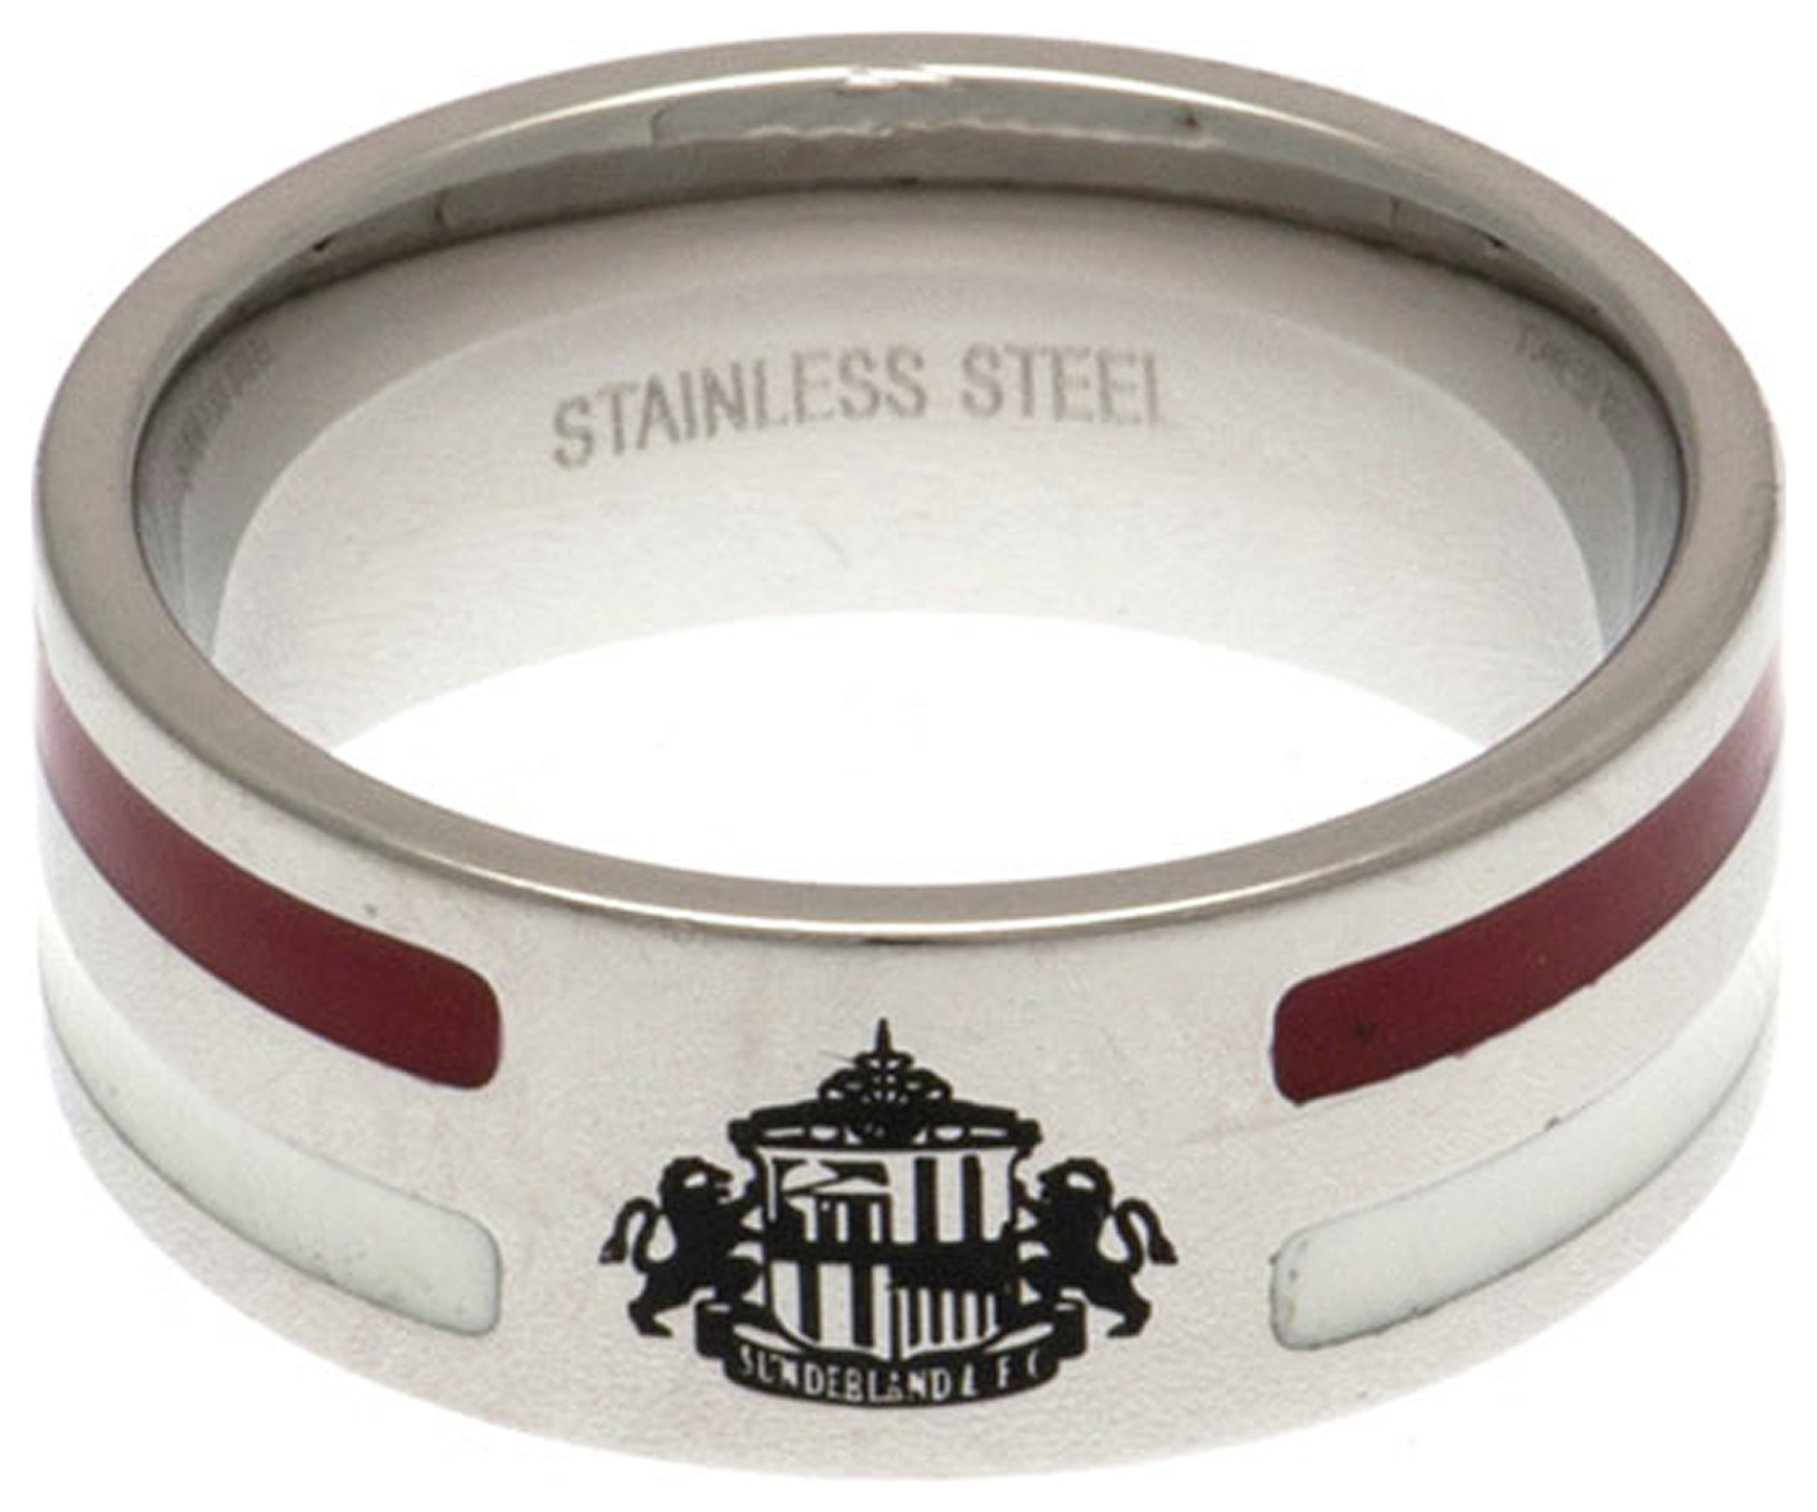 Stainless Steel Sunderland Striped Ring - Size U